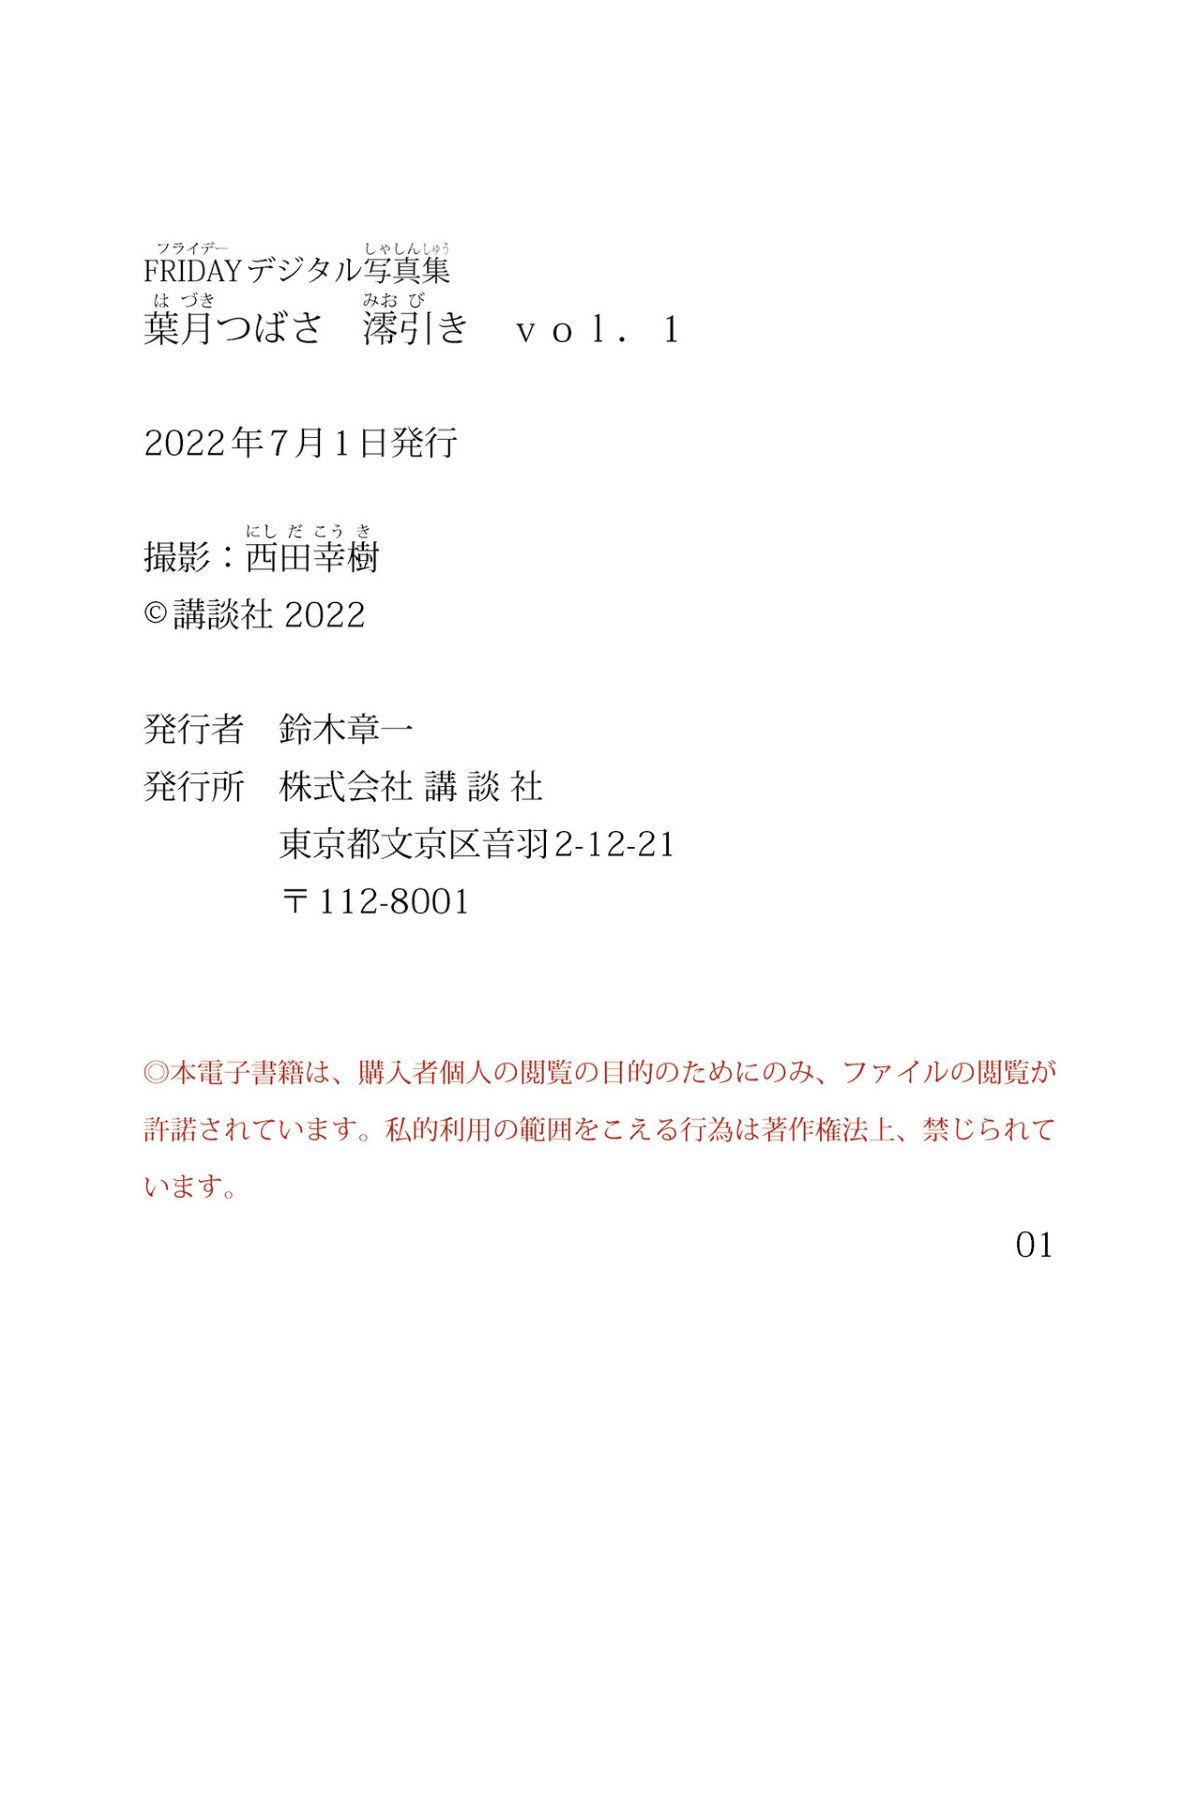 FRIDAY Digital Photobook Tsubasa Hazuki 葉月つばさ Miobiki Vol 1 澪引き Vol 1 2022 07 01 0067 8396523611.jpg